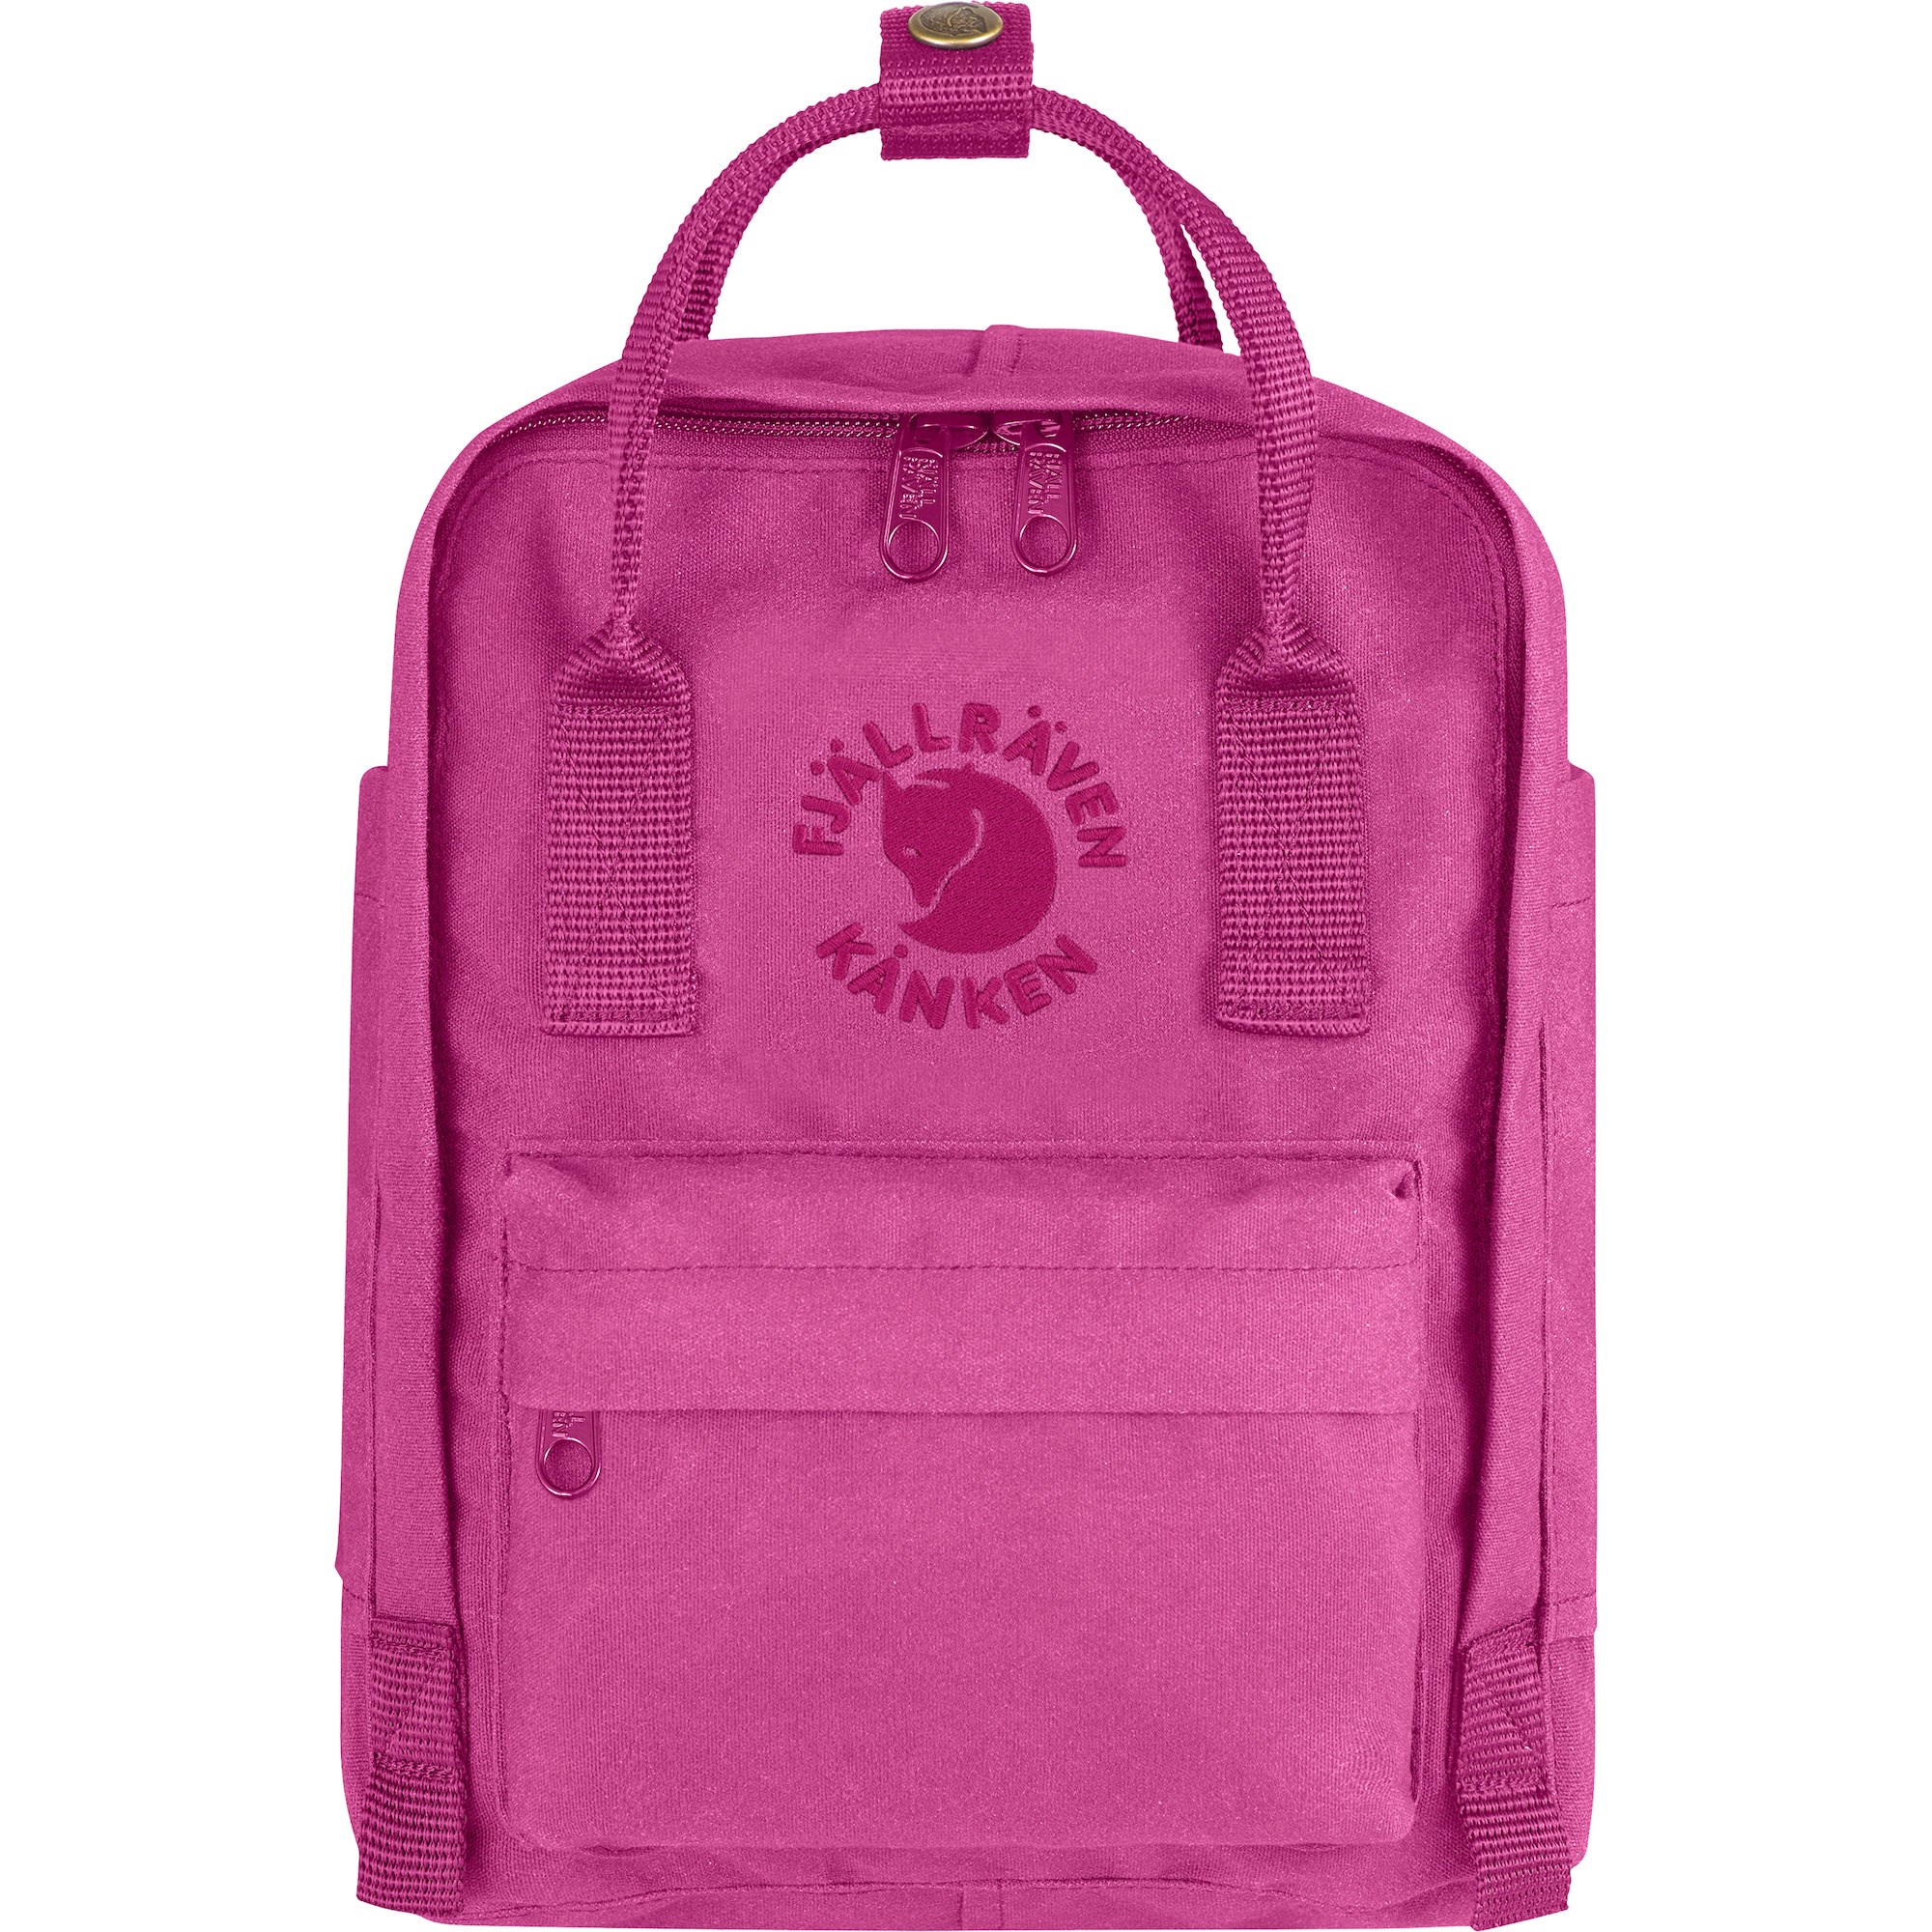 Ox Red Fjallraven Kanken Mini Water Resistant Backpack for everyday